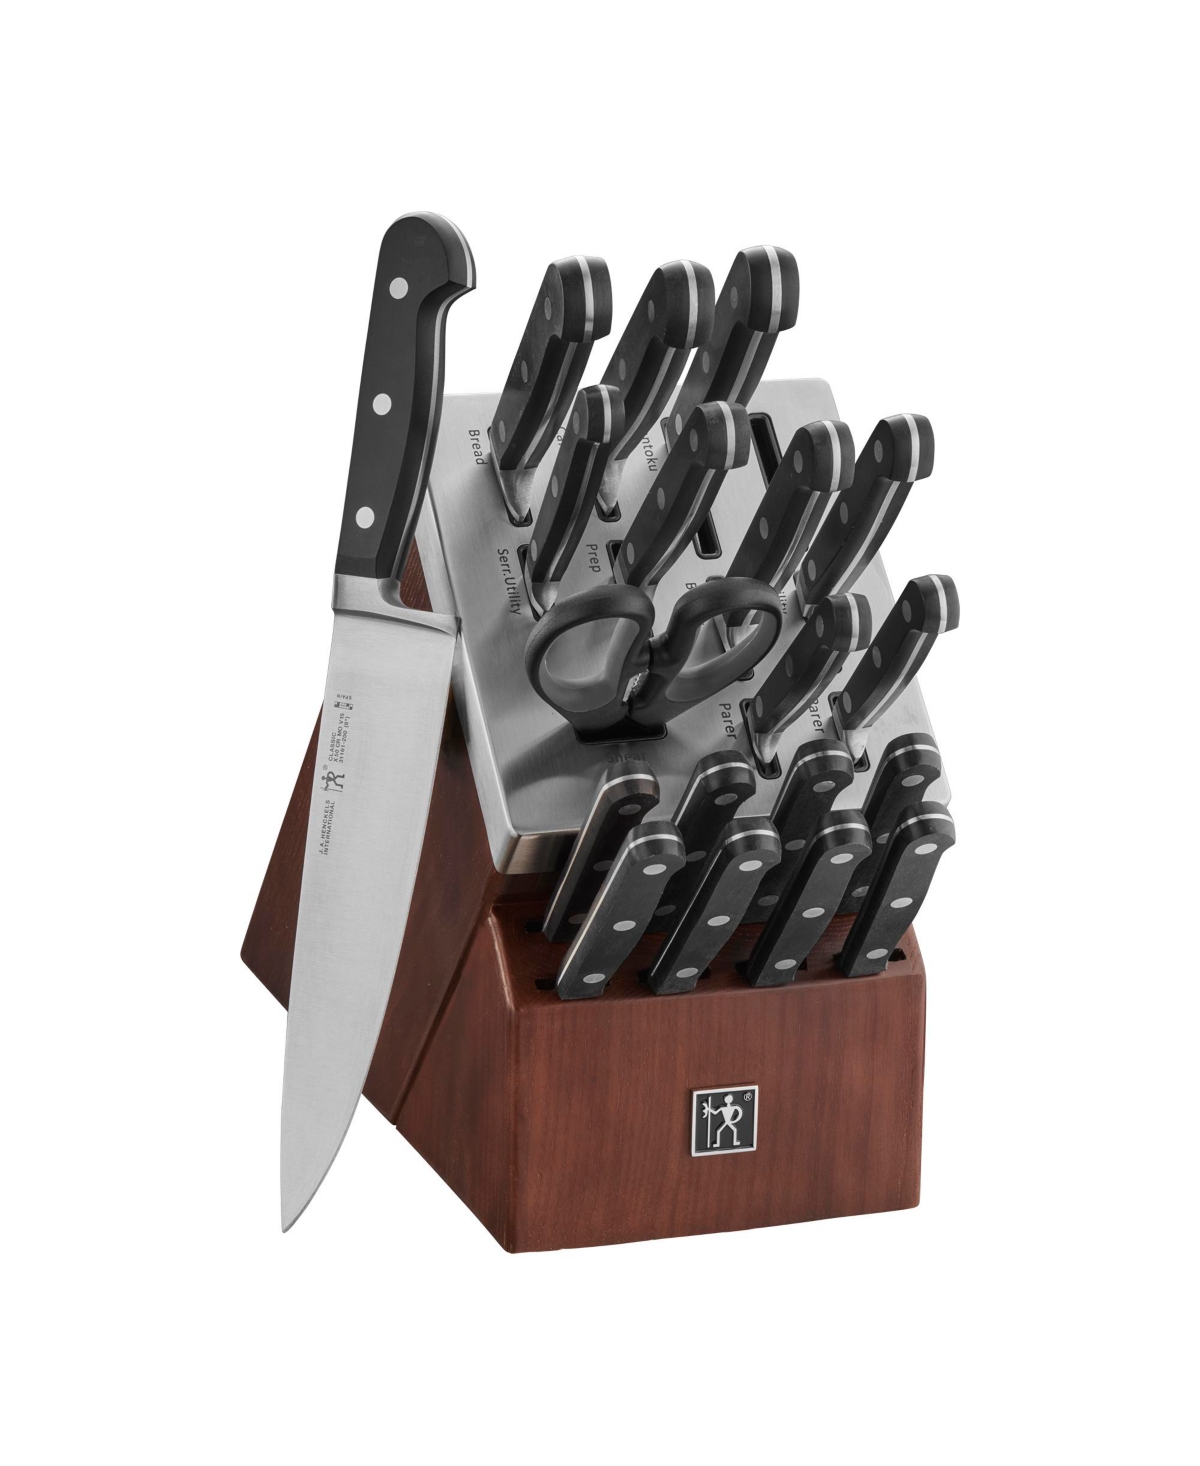 J.a. Henckels International Classic 20-pc. Self-sharpening Cutlery Set